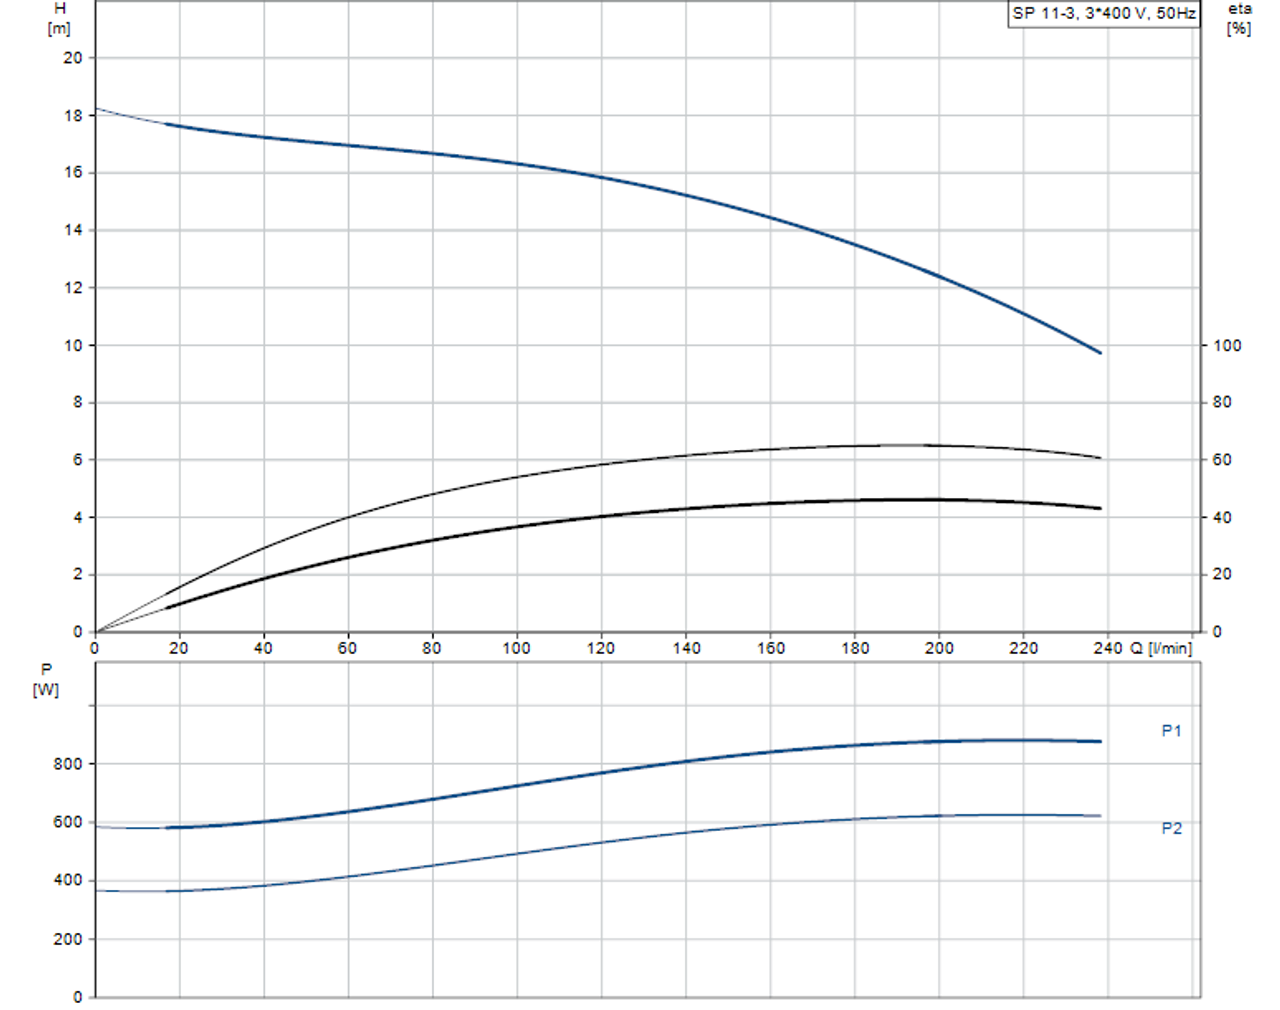 SP 11-3 415v Performance Curve